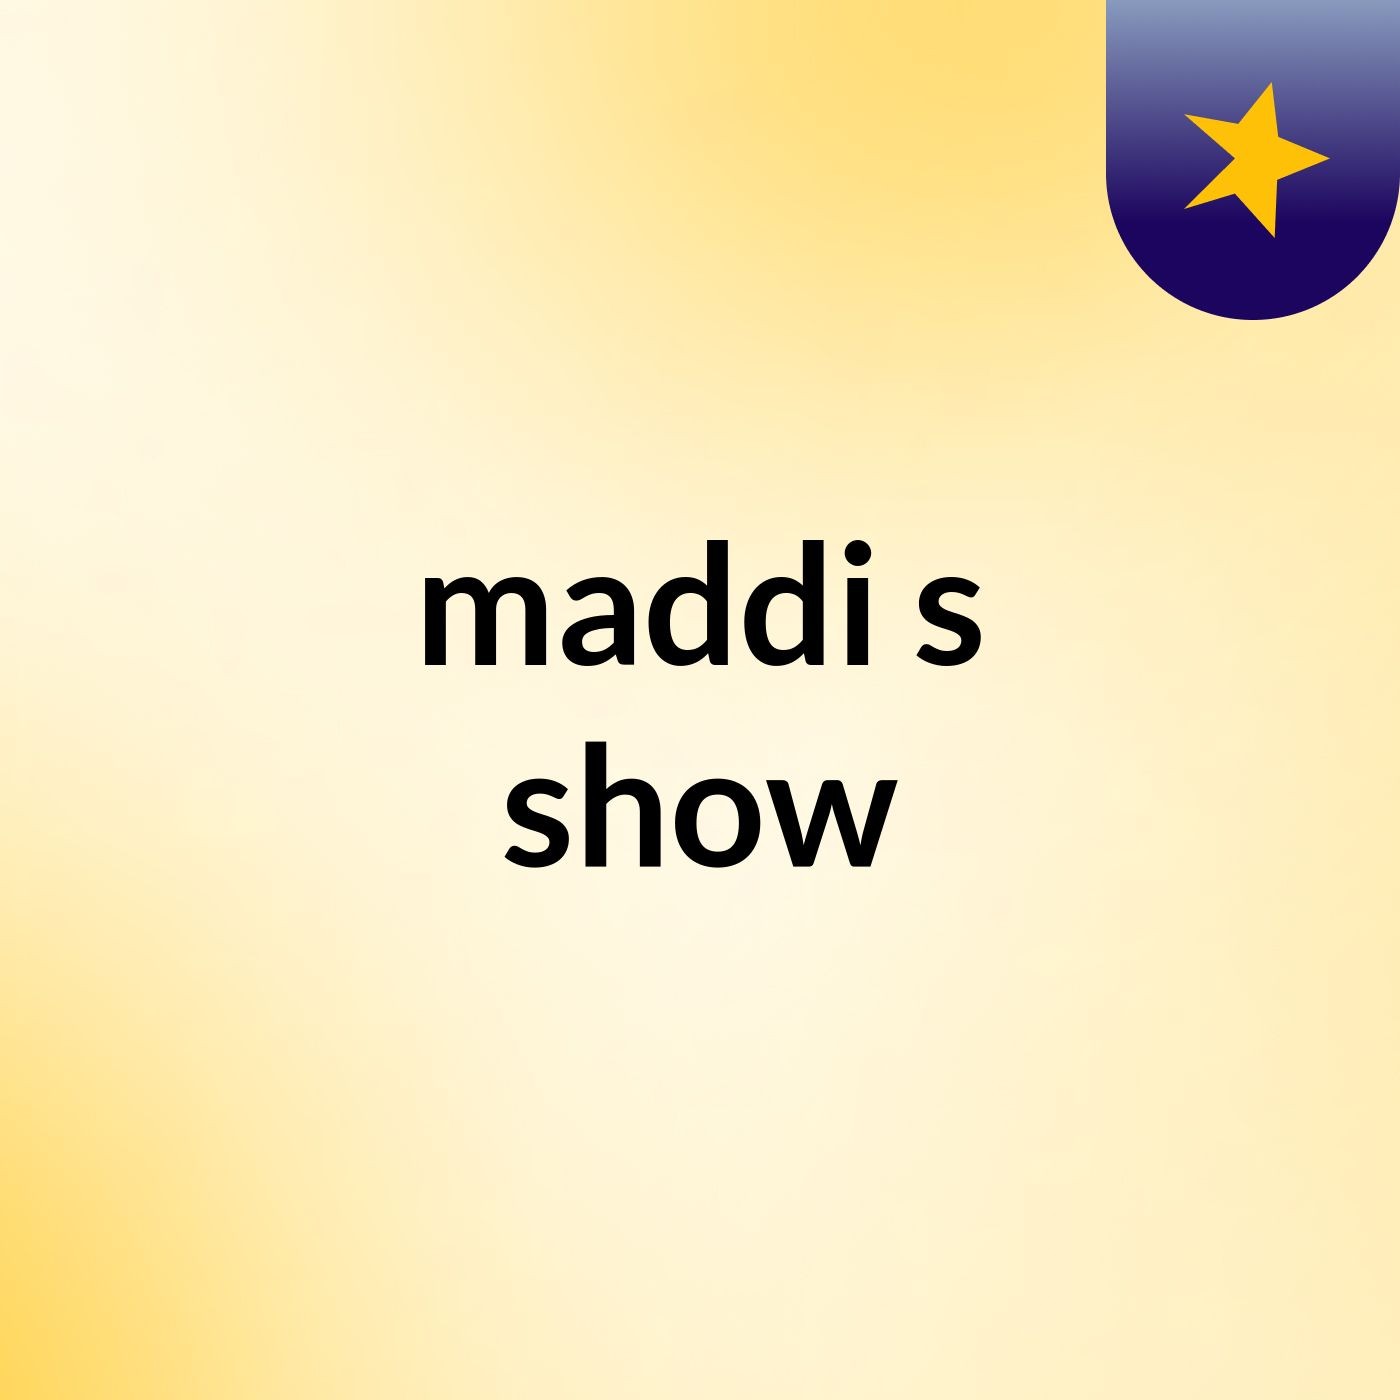 maddi's show